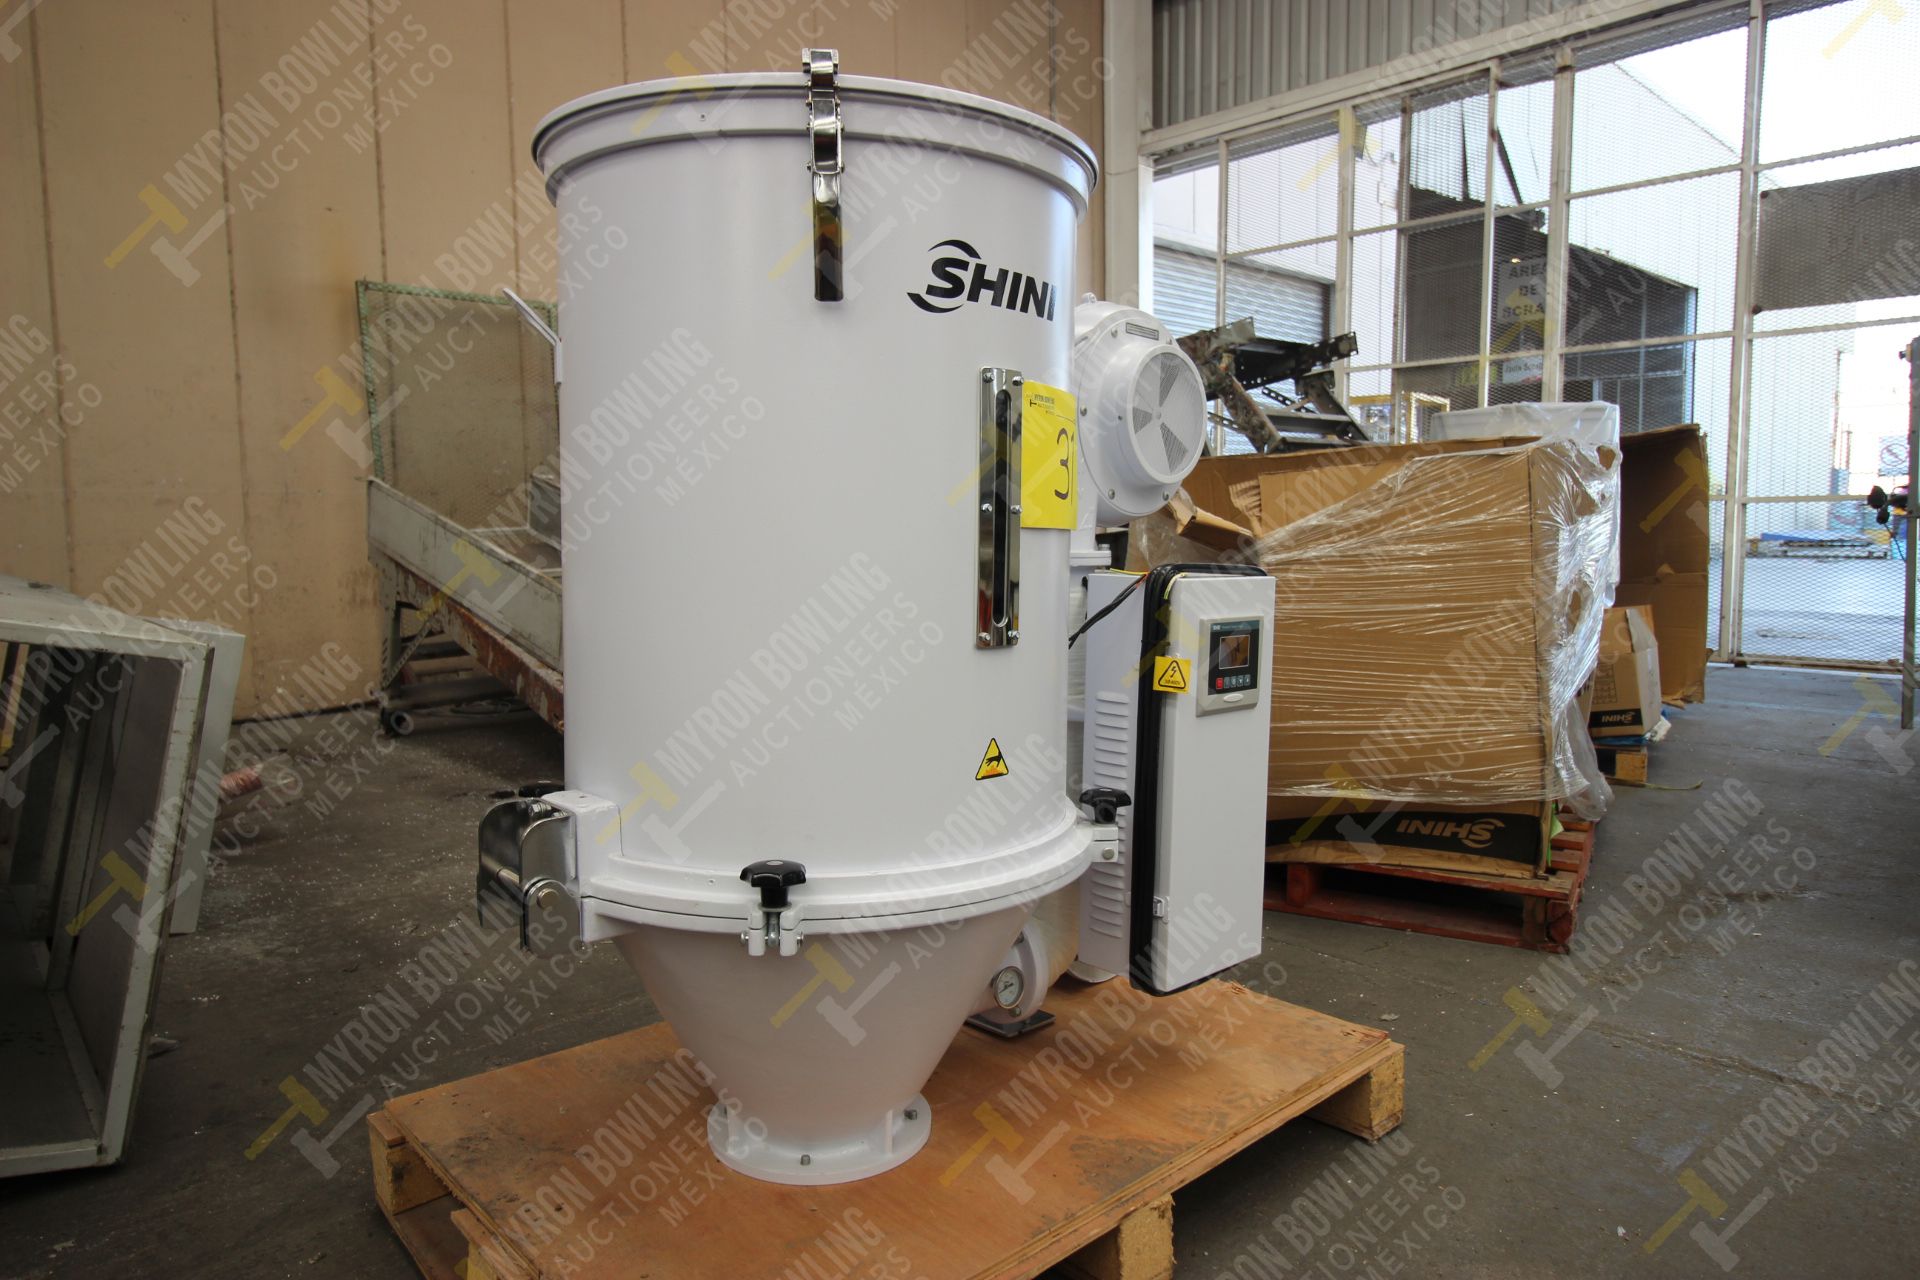 Shini Plastics Technologies 100kg. hopper dryer mod. SHD-100SL-CE, serial number 2HD16100392 - Image 5 of 15